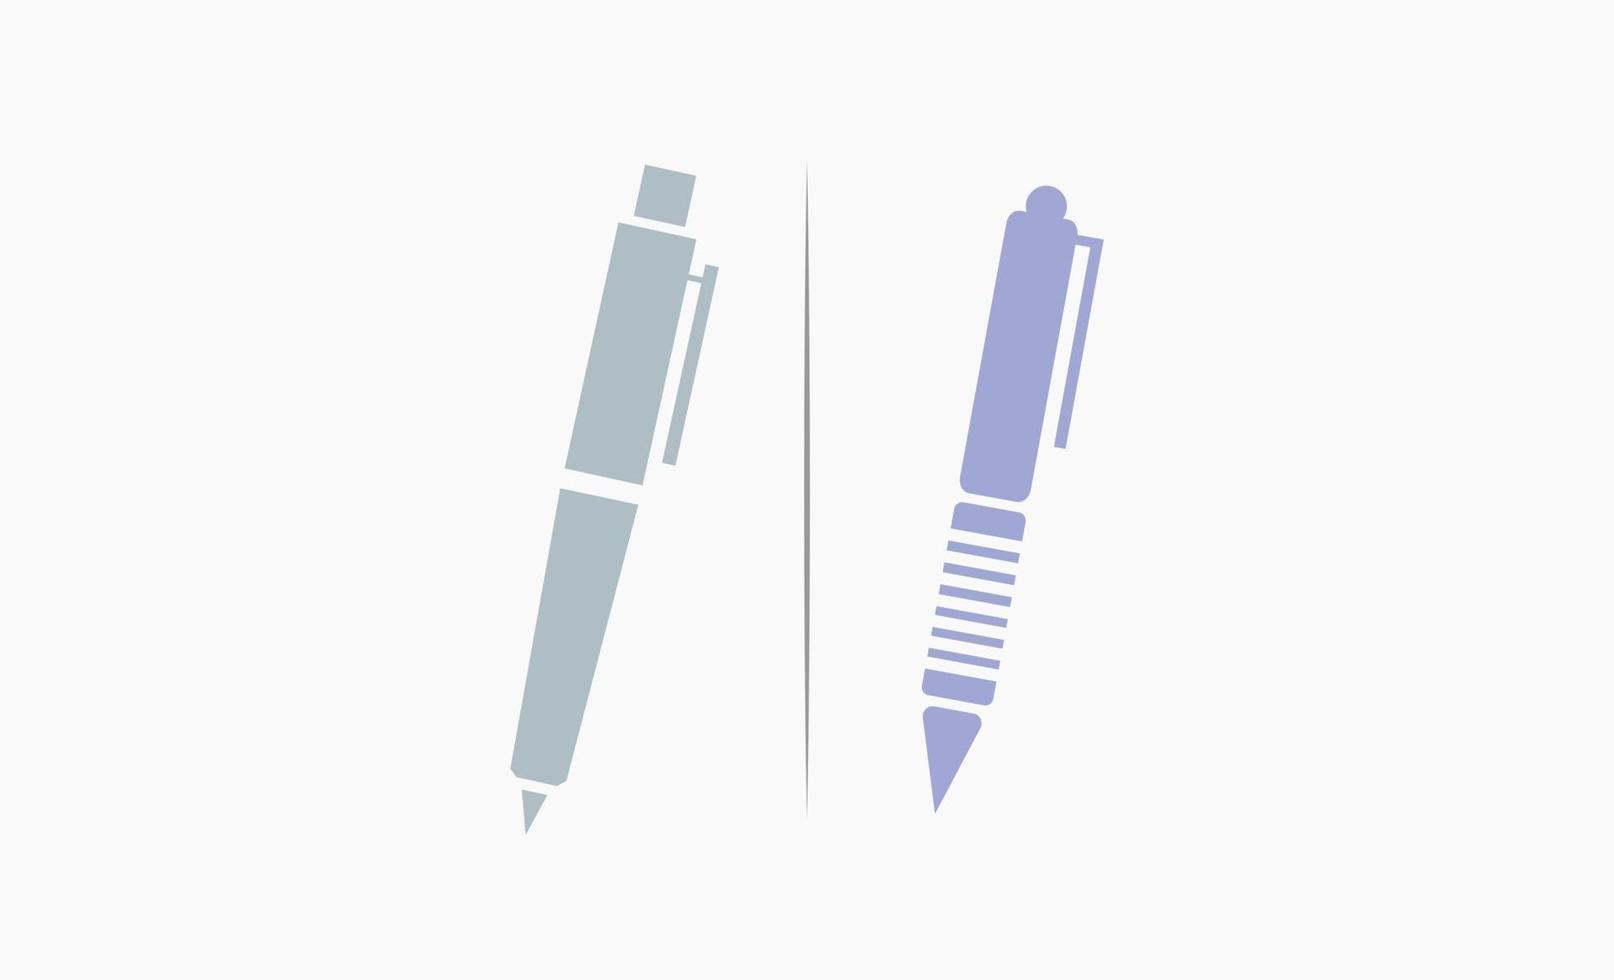 Pen tool  icon clipart design vector illustration